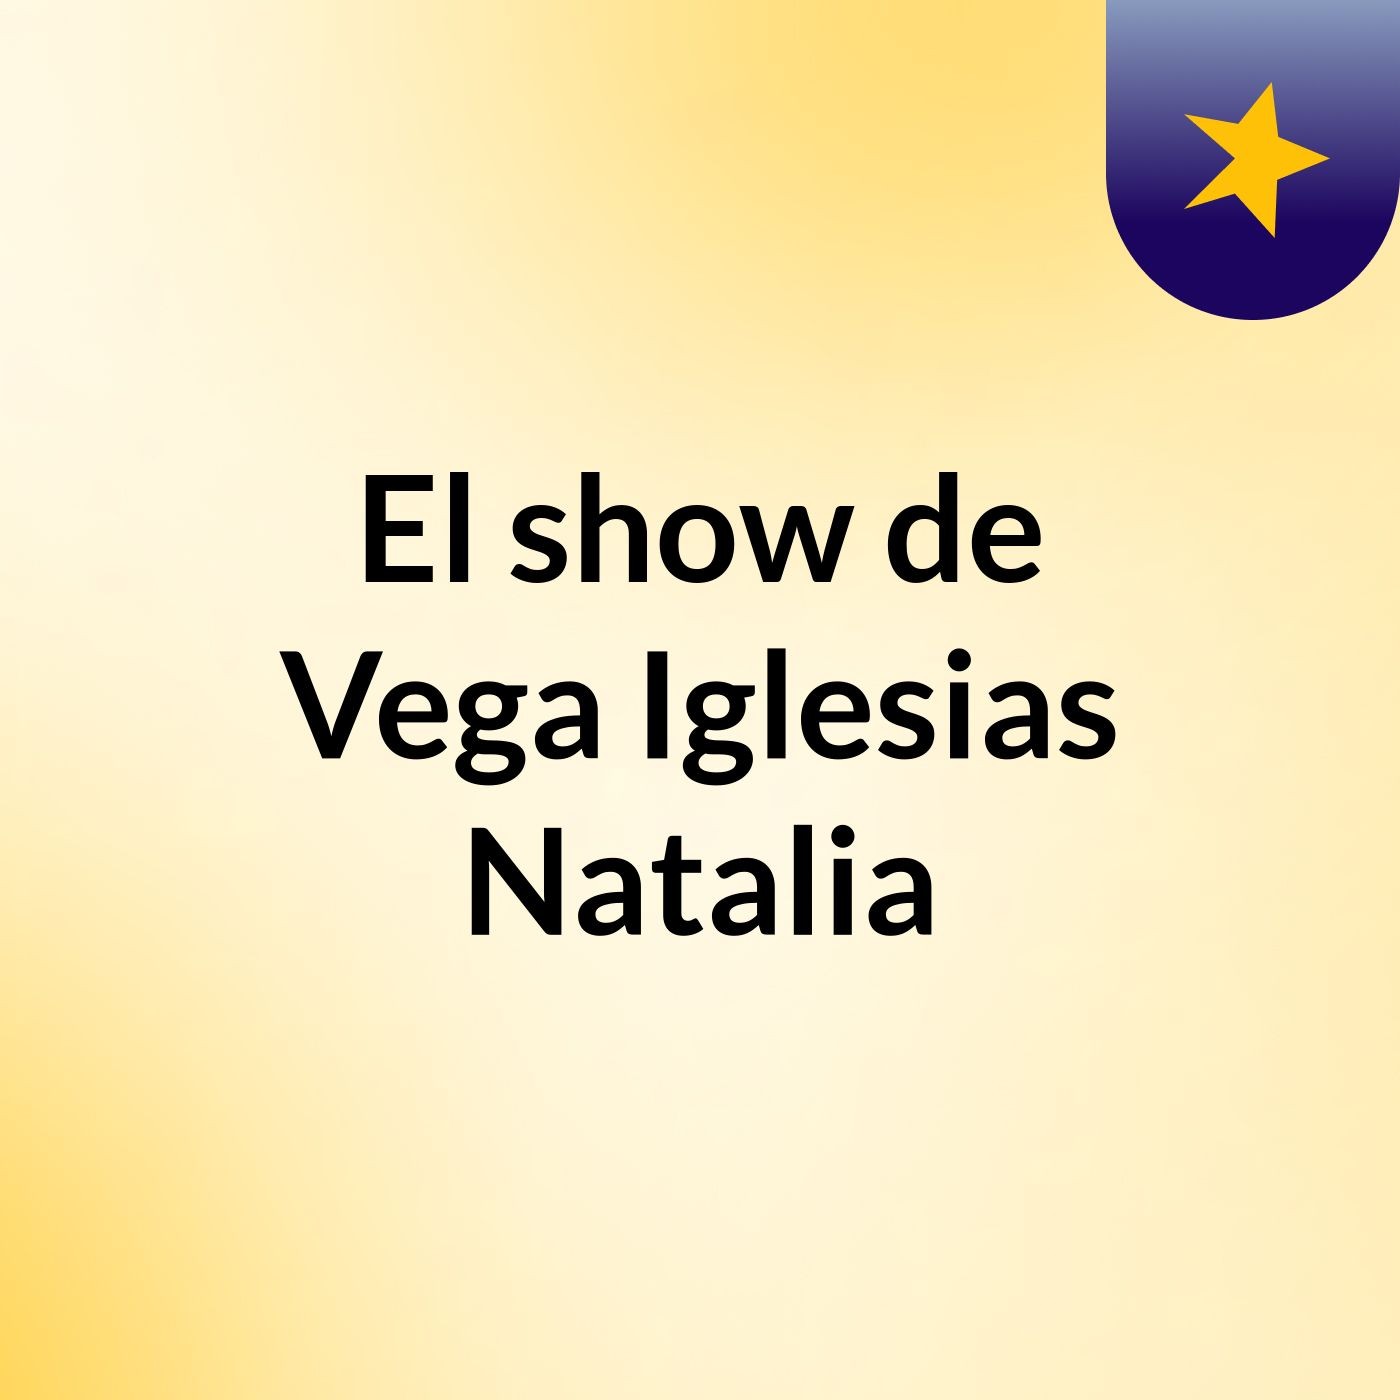 El show de Vega Iglesias, Natalia